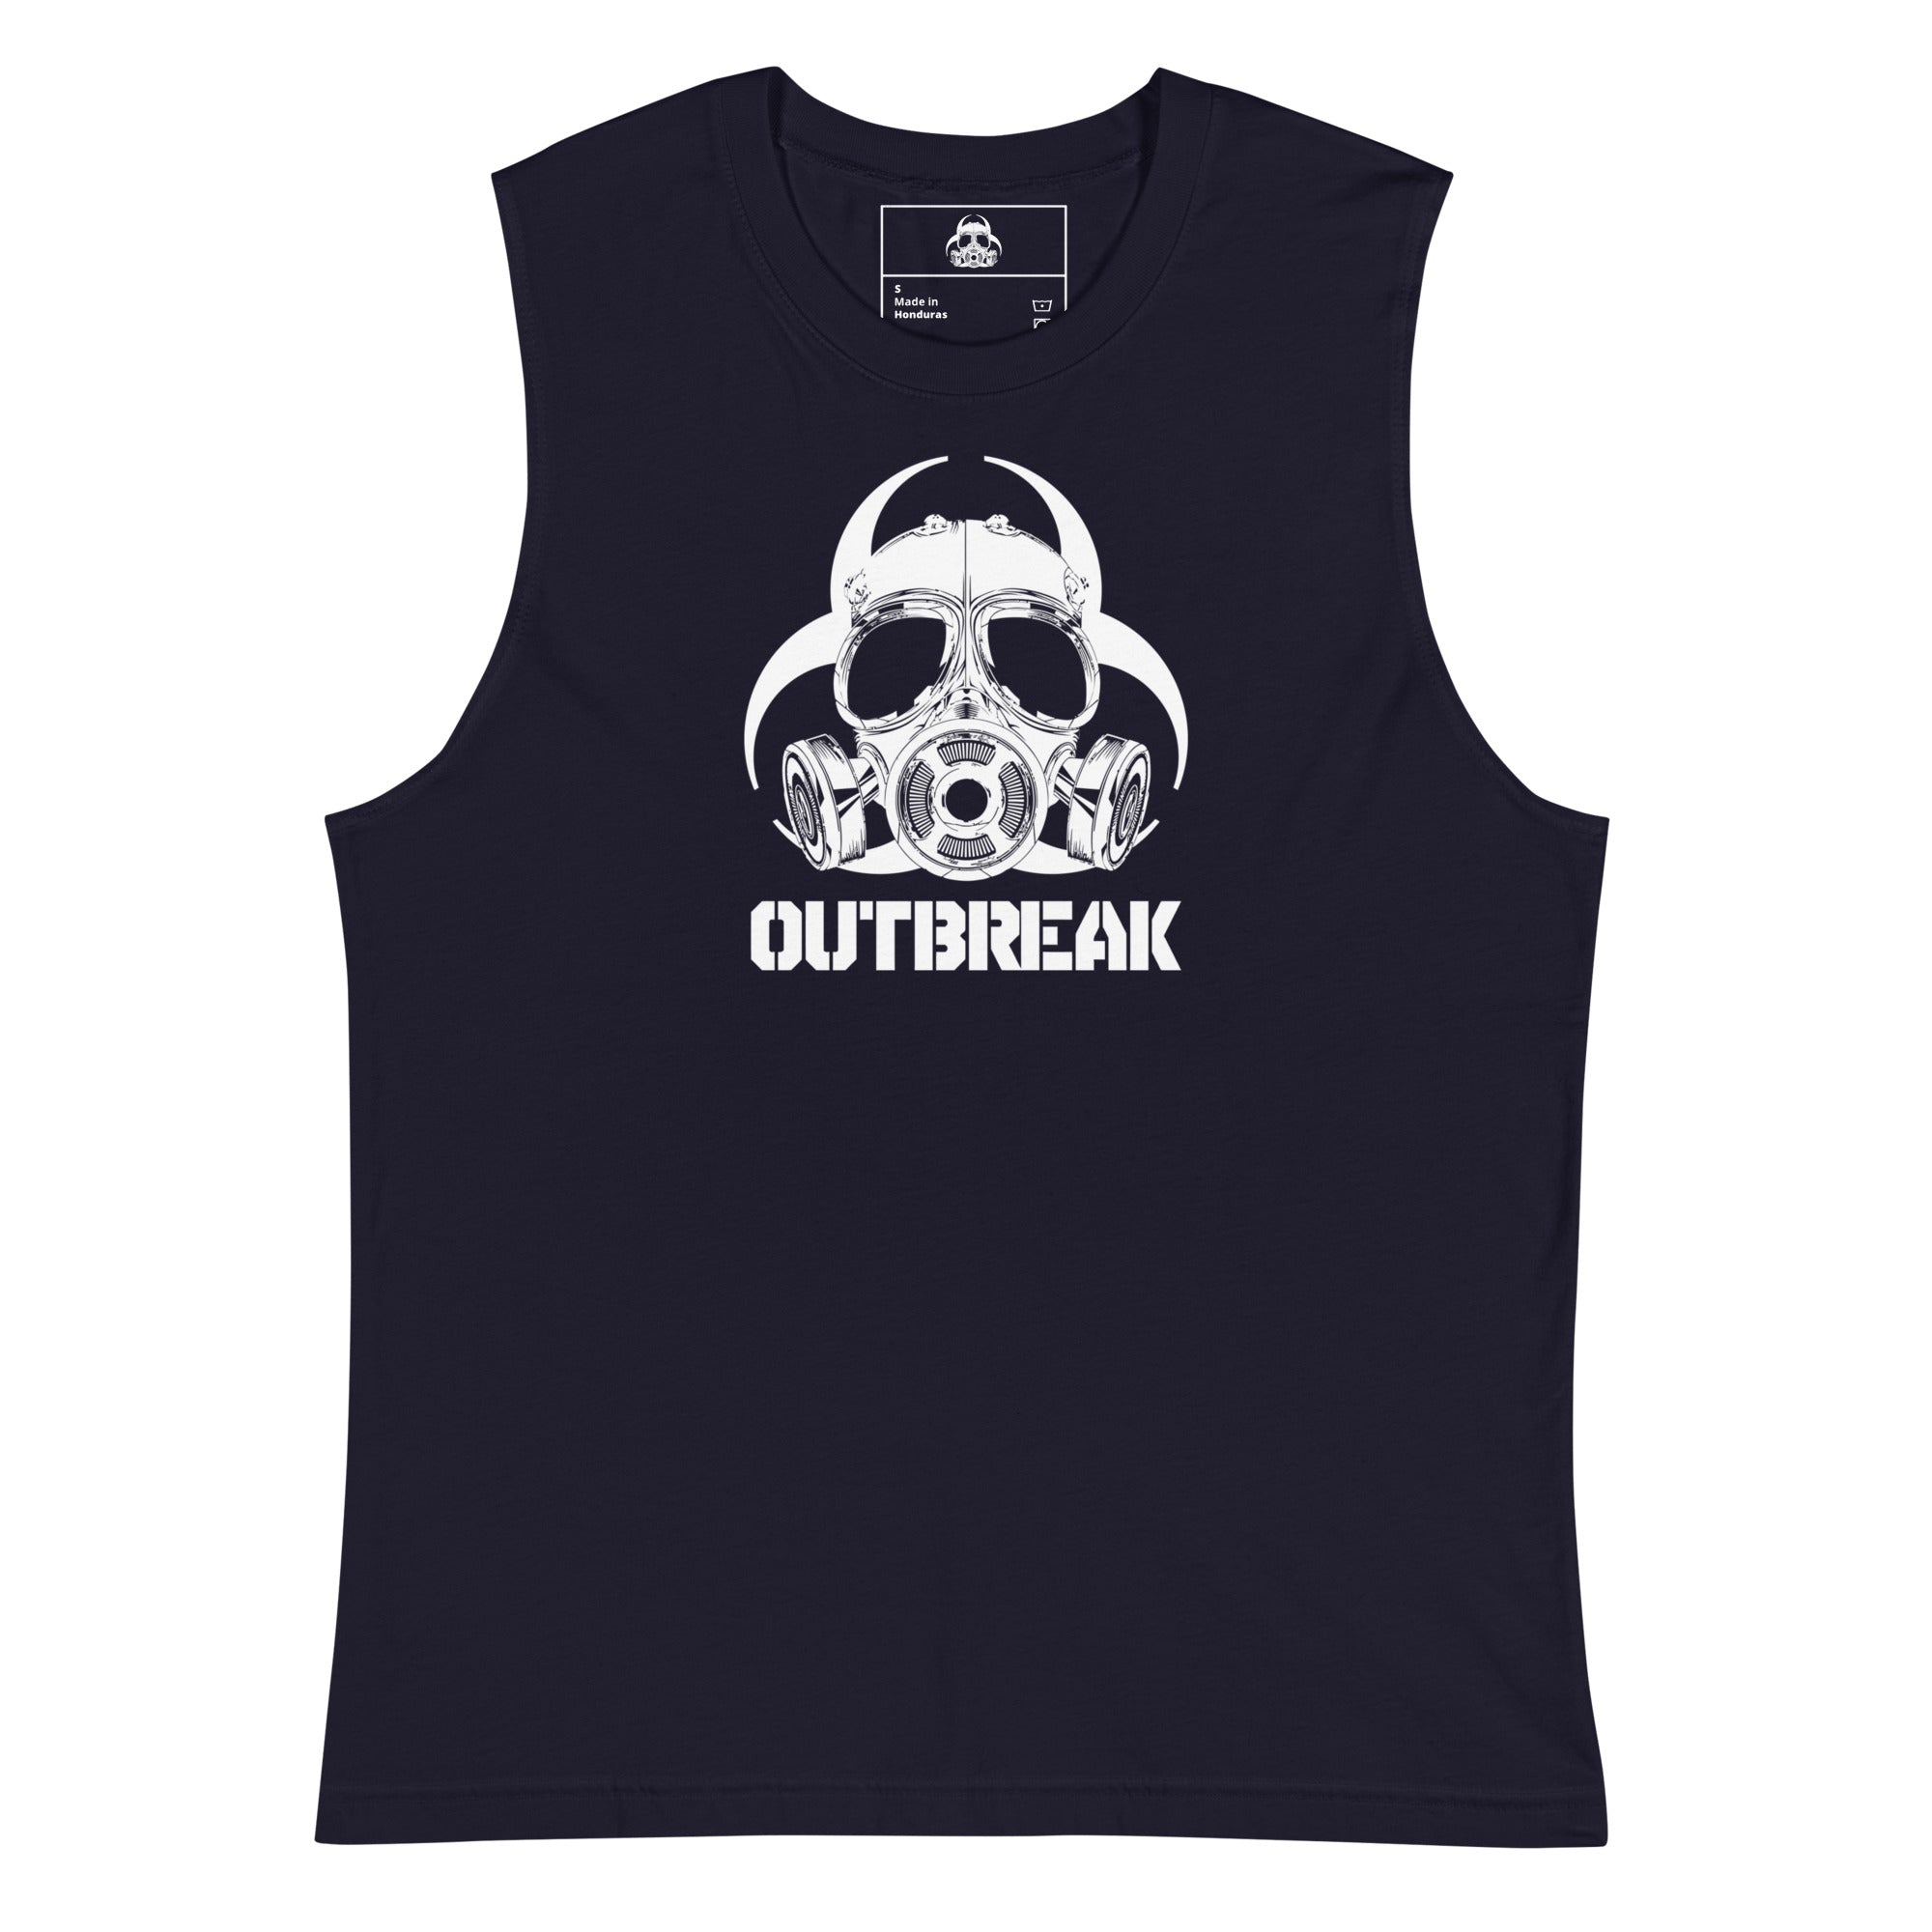 Original Outbreak Muscle Shirt